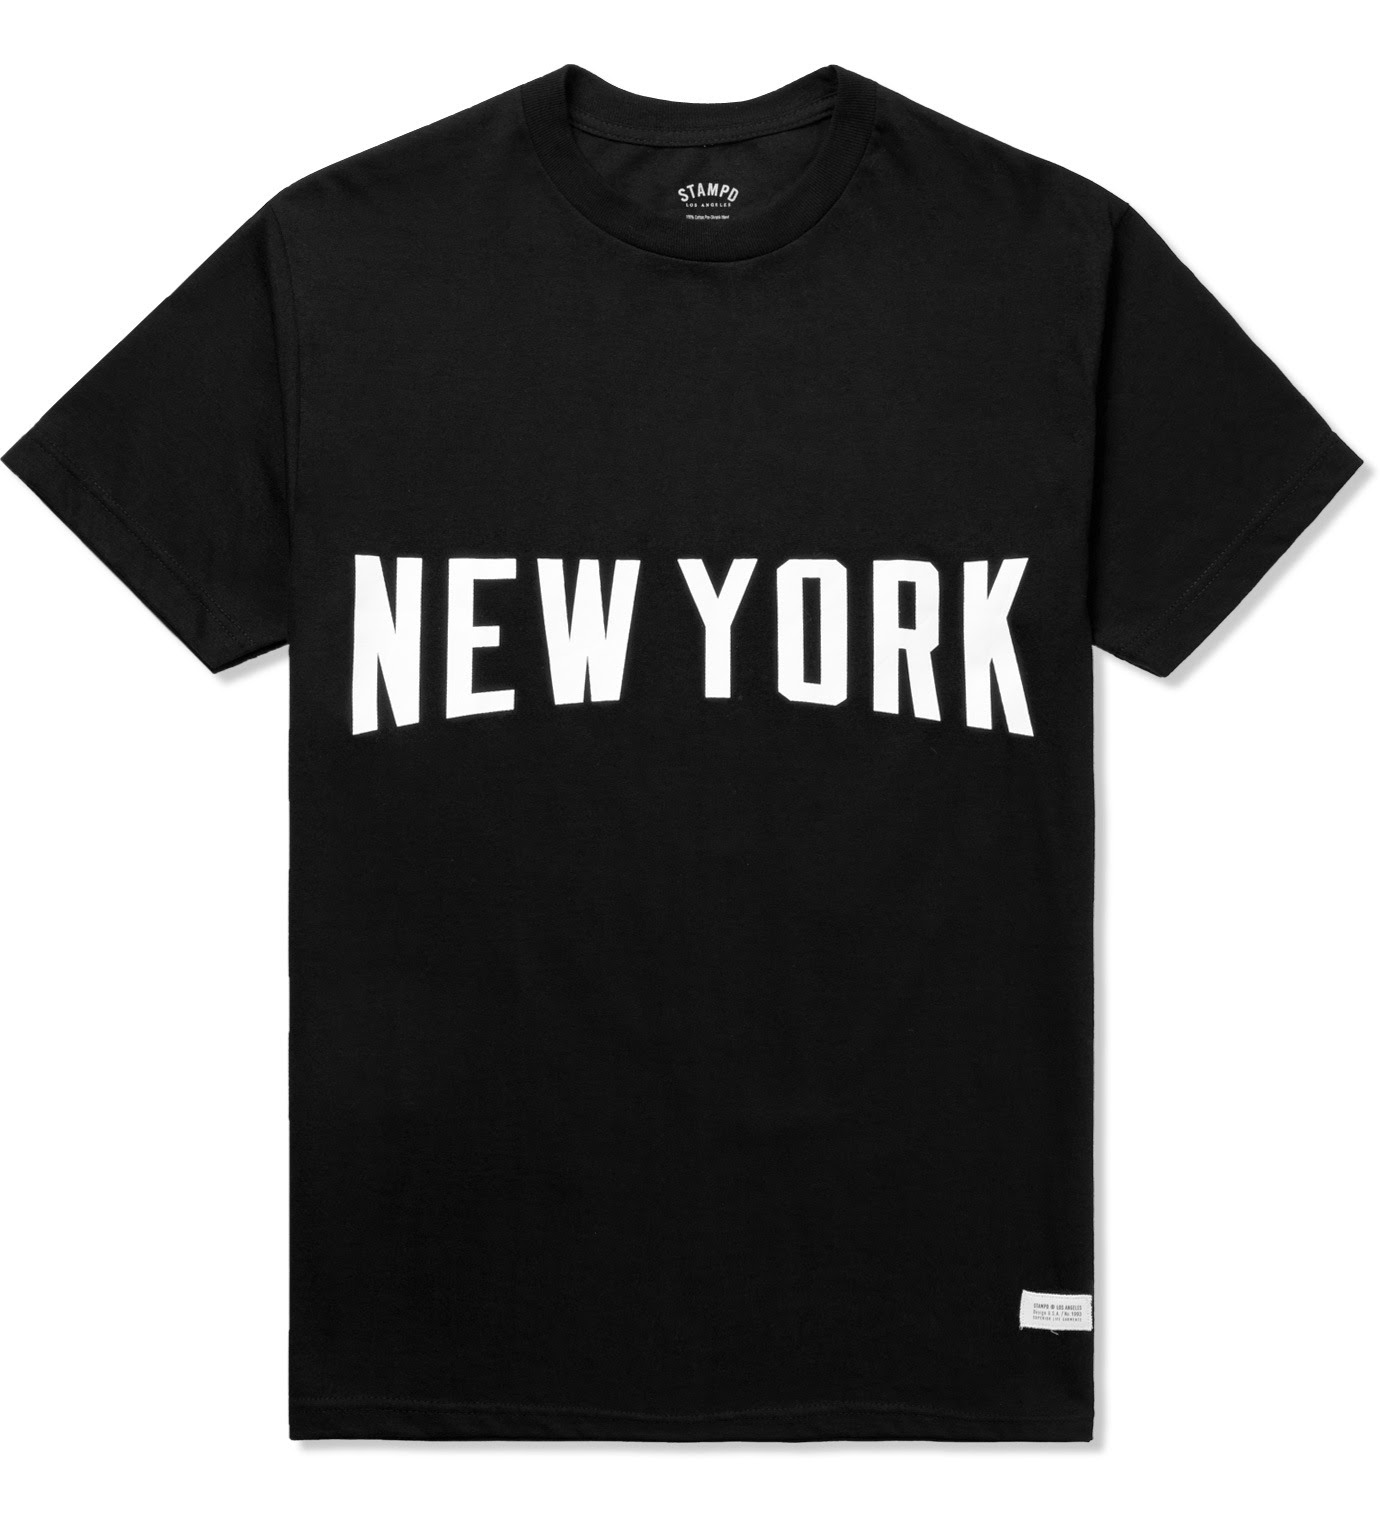 http://www.maps-shop.com/item/Black-New-York-T/